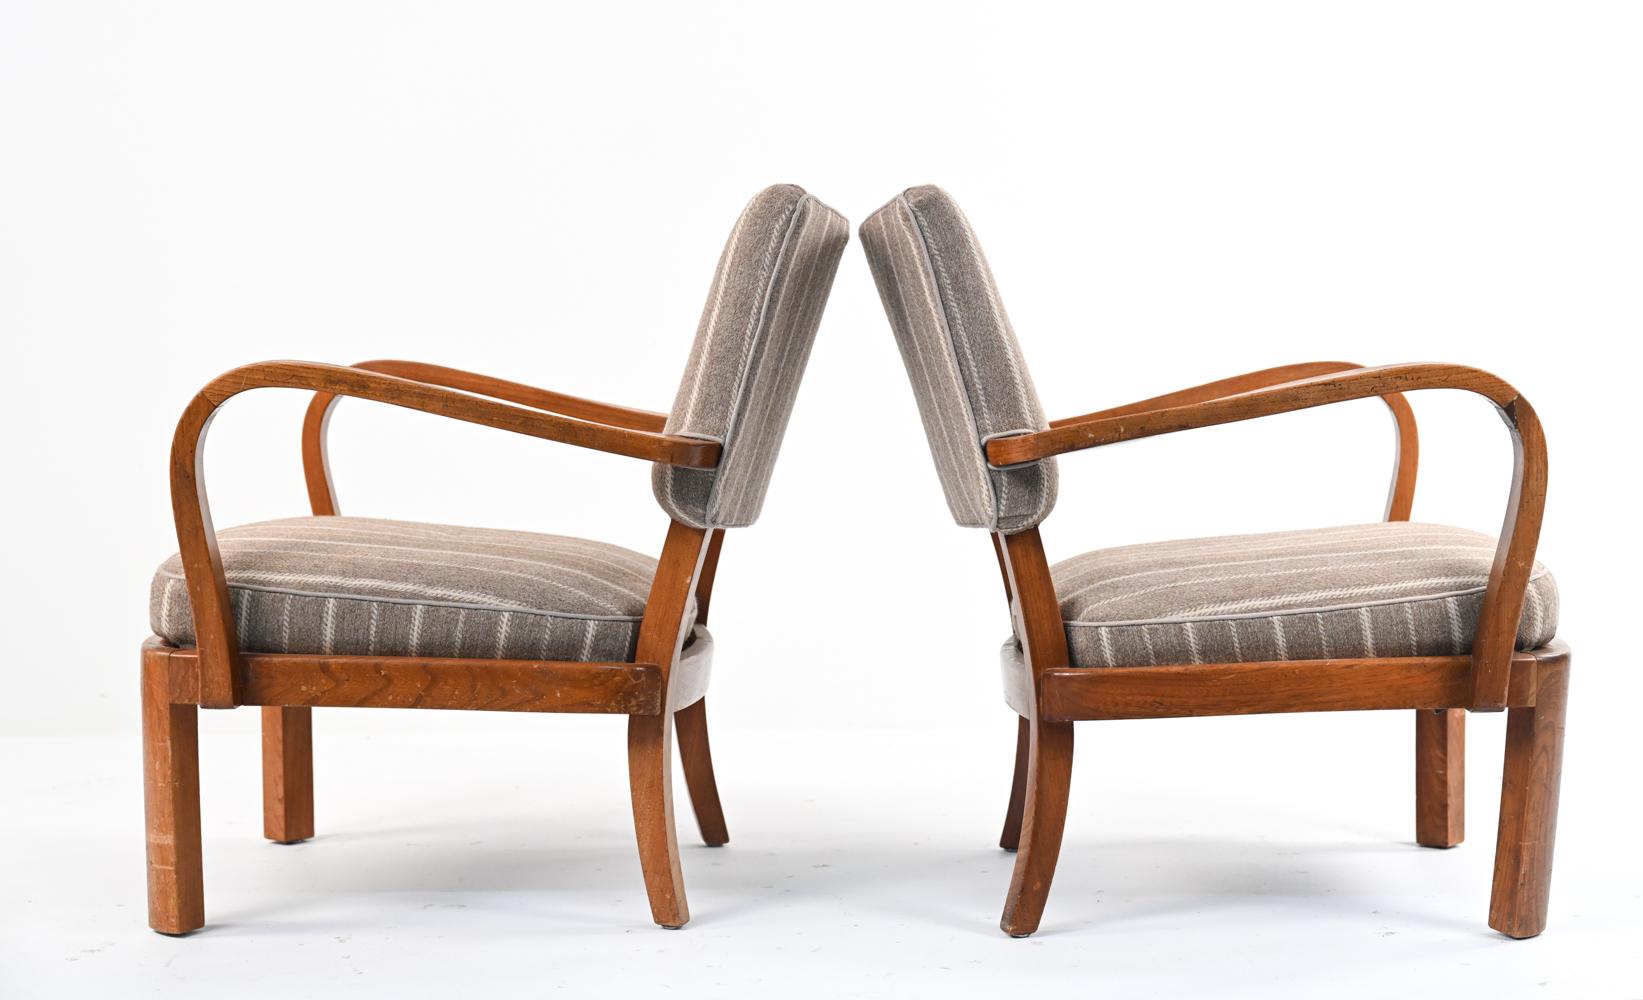 Pair of Scandinavian Elm Wood Bridge Chairs, 1940's-1950's For Sale 9